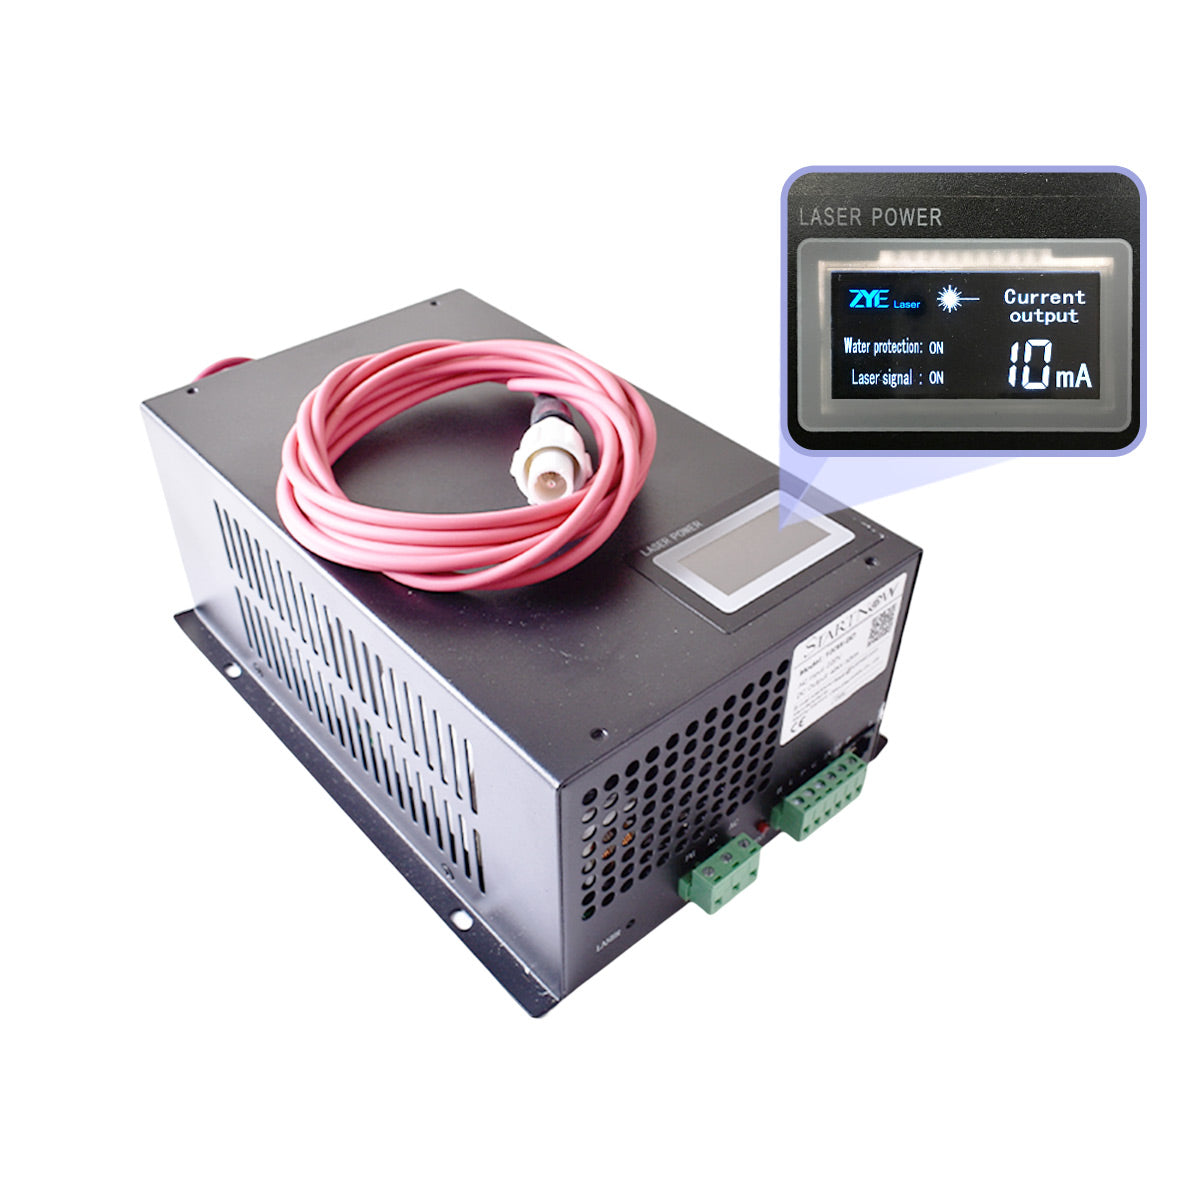 Startnow 100W-BD CO2 Laser Power Supply With Display Screen 110V PSU MYJG 220V Laser Tube Cutting Source